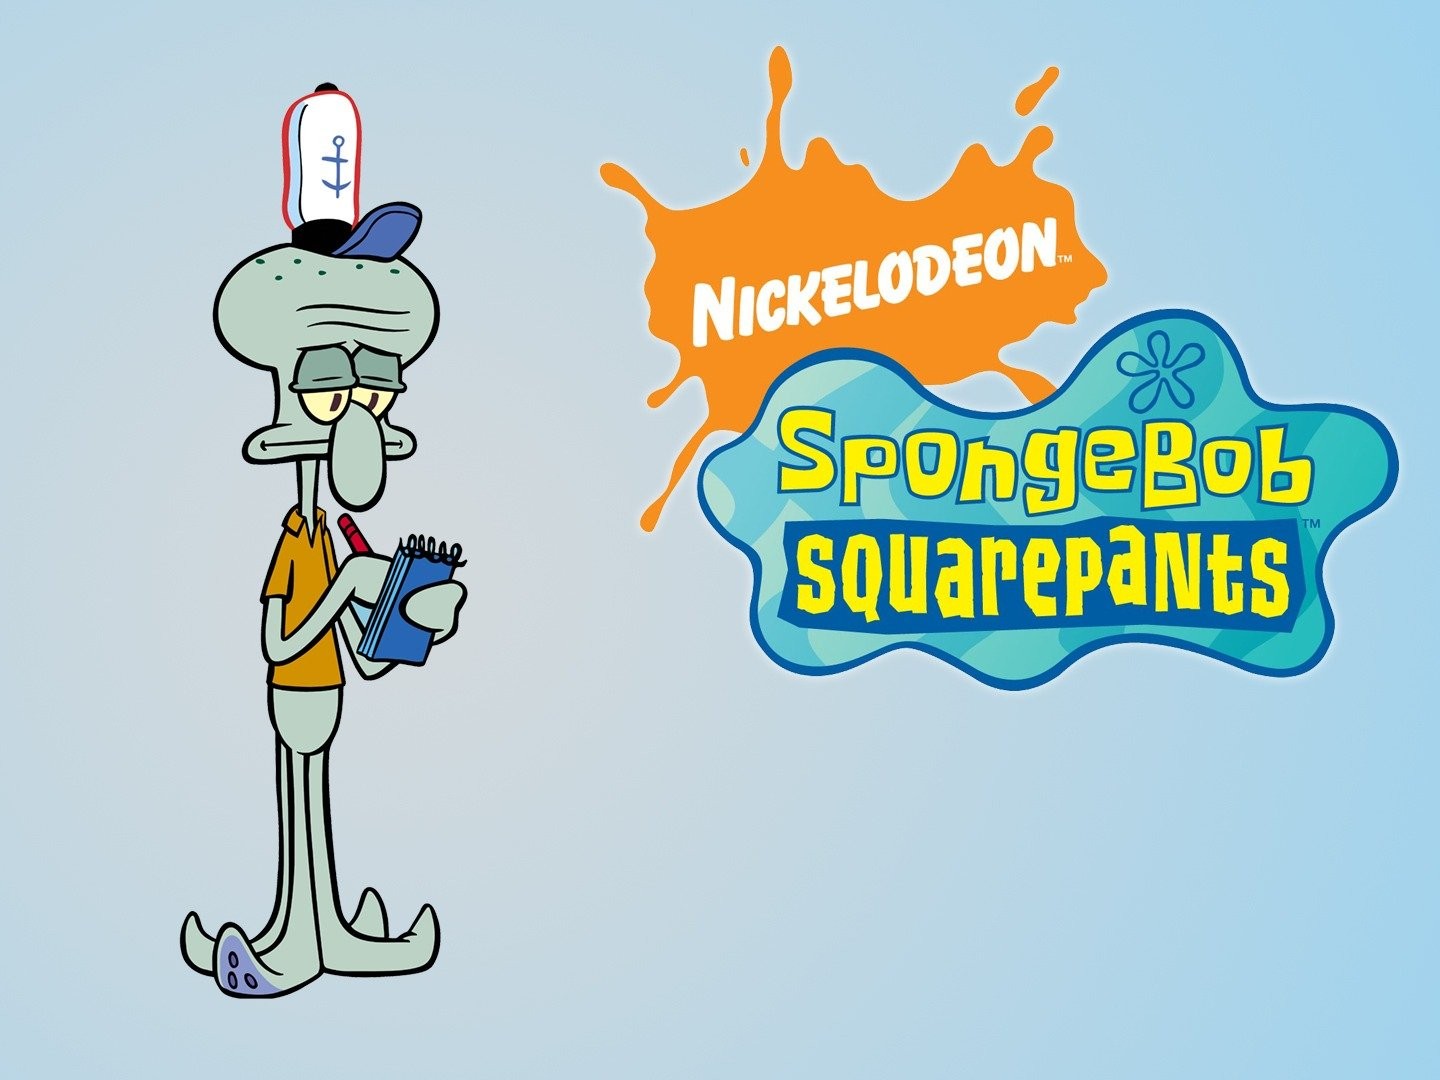 spongebob's face when he discovers squidward likes krabby patties